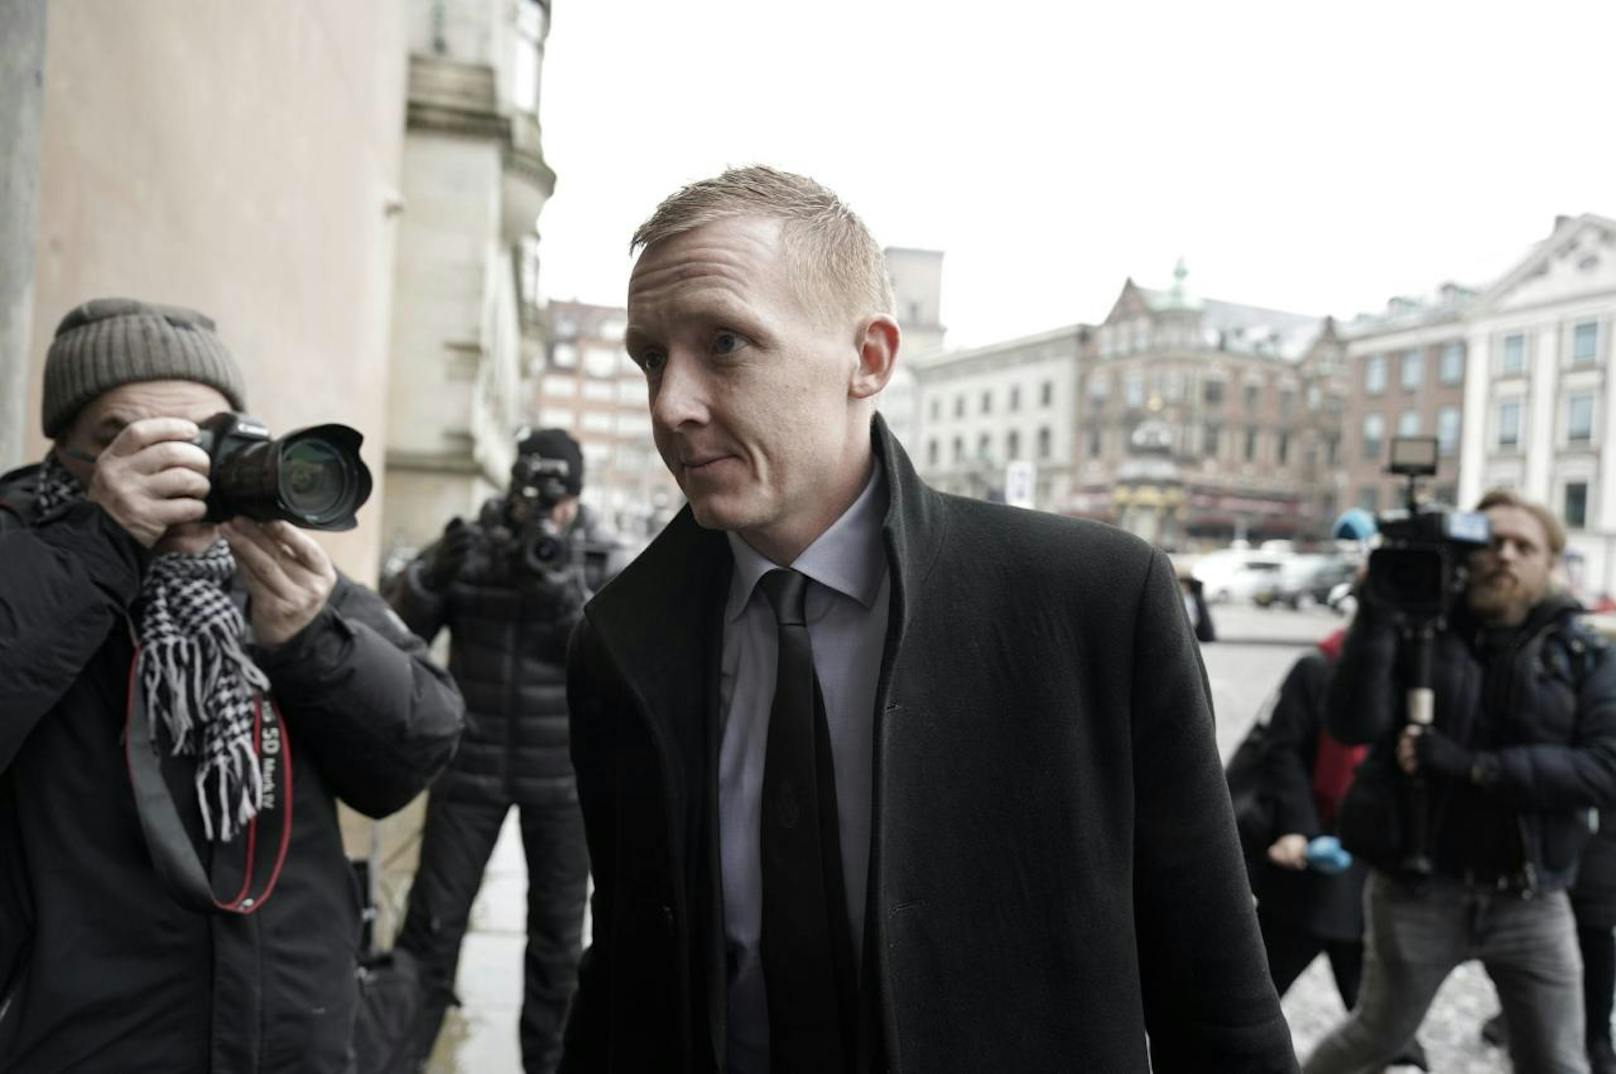 Staatsanwalt Jakob Buch-Jepsen am Gericht in Kopenhagen, wo der Prozess gegen Peter Madsen läuft.